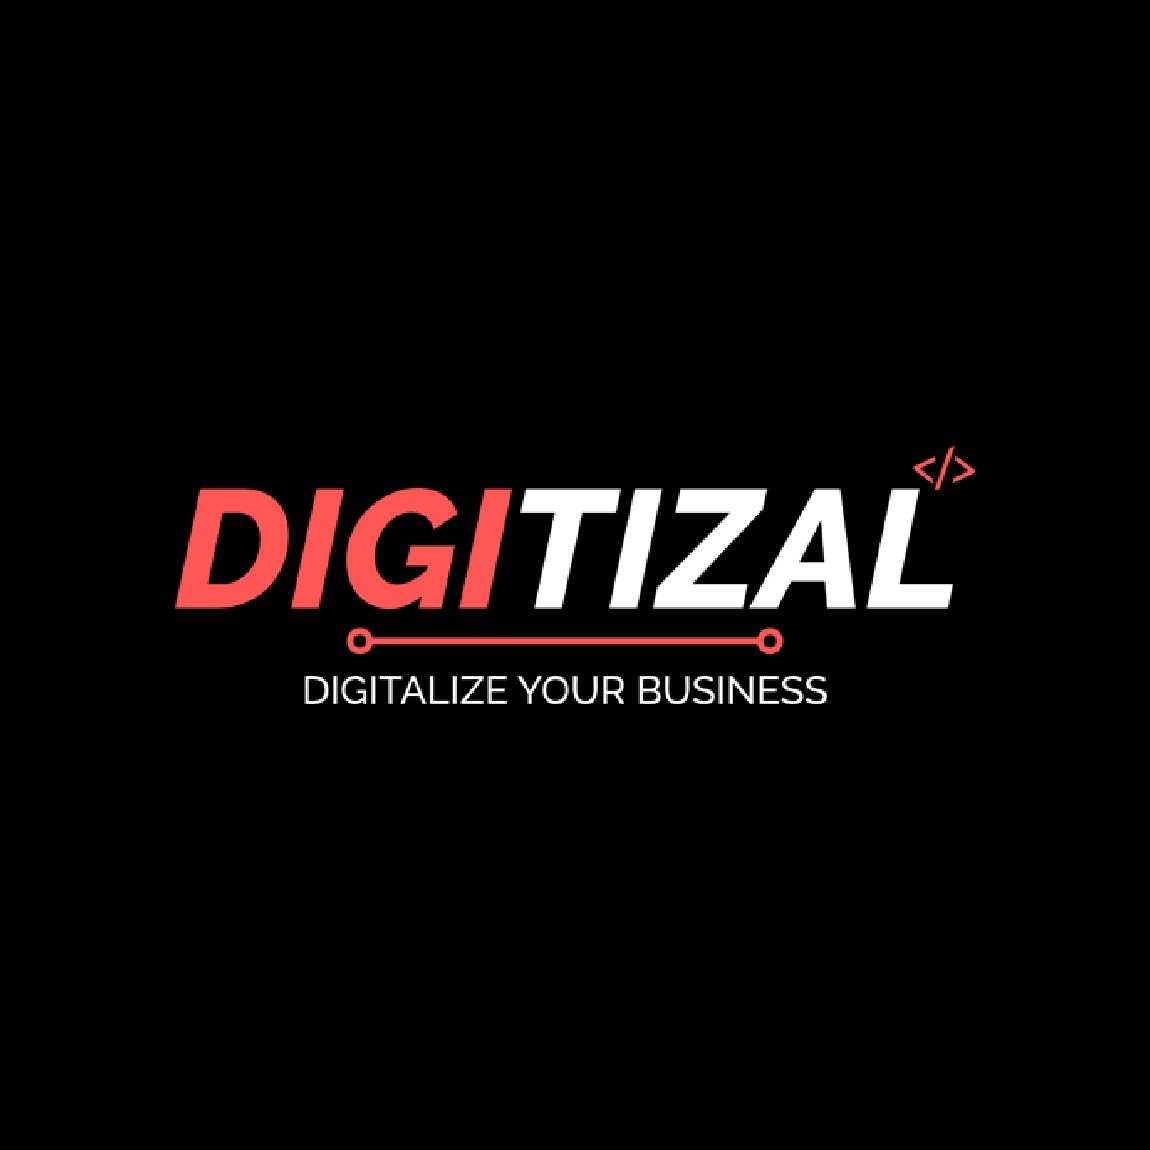 Digitizal Logo